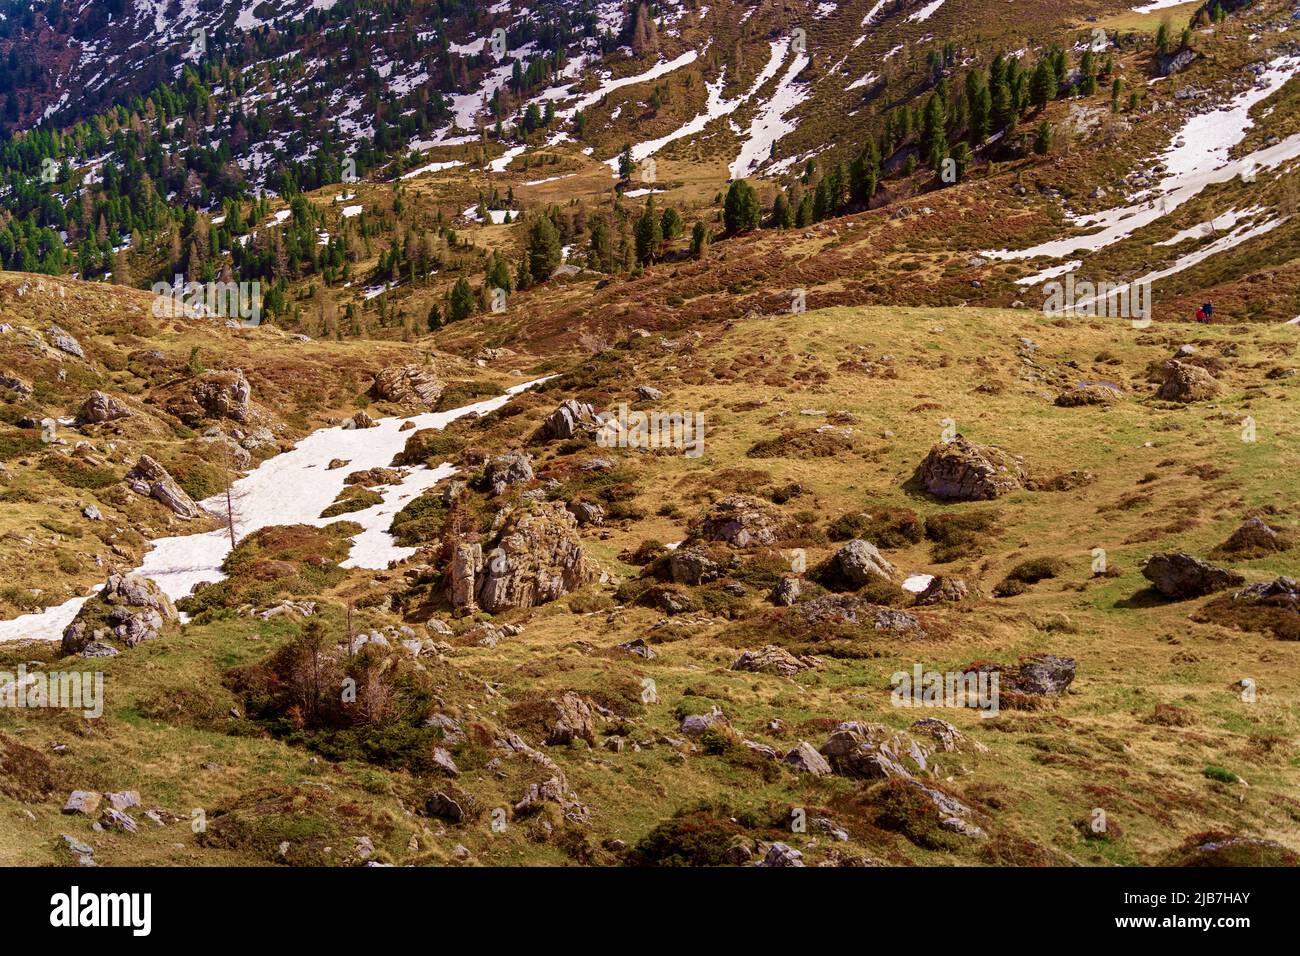 Landscape in the mountains of Austria, Nockalmstrasse.Europe Stock Photo